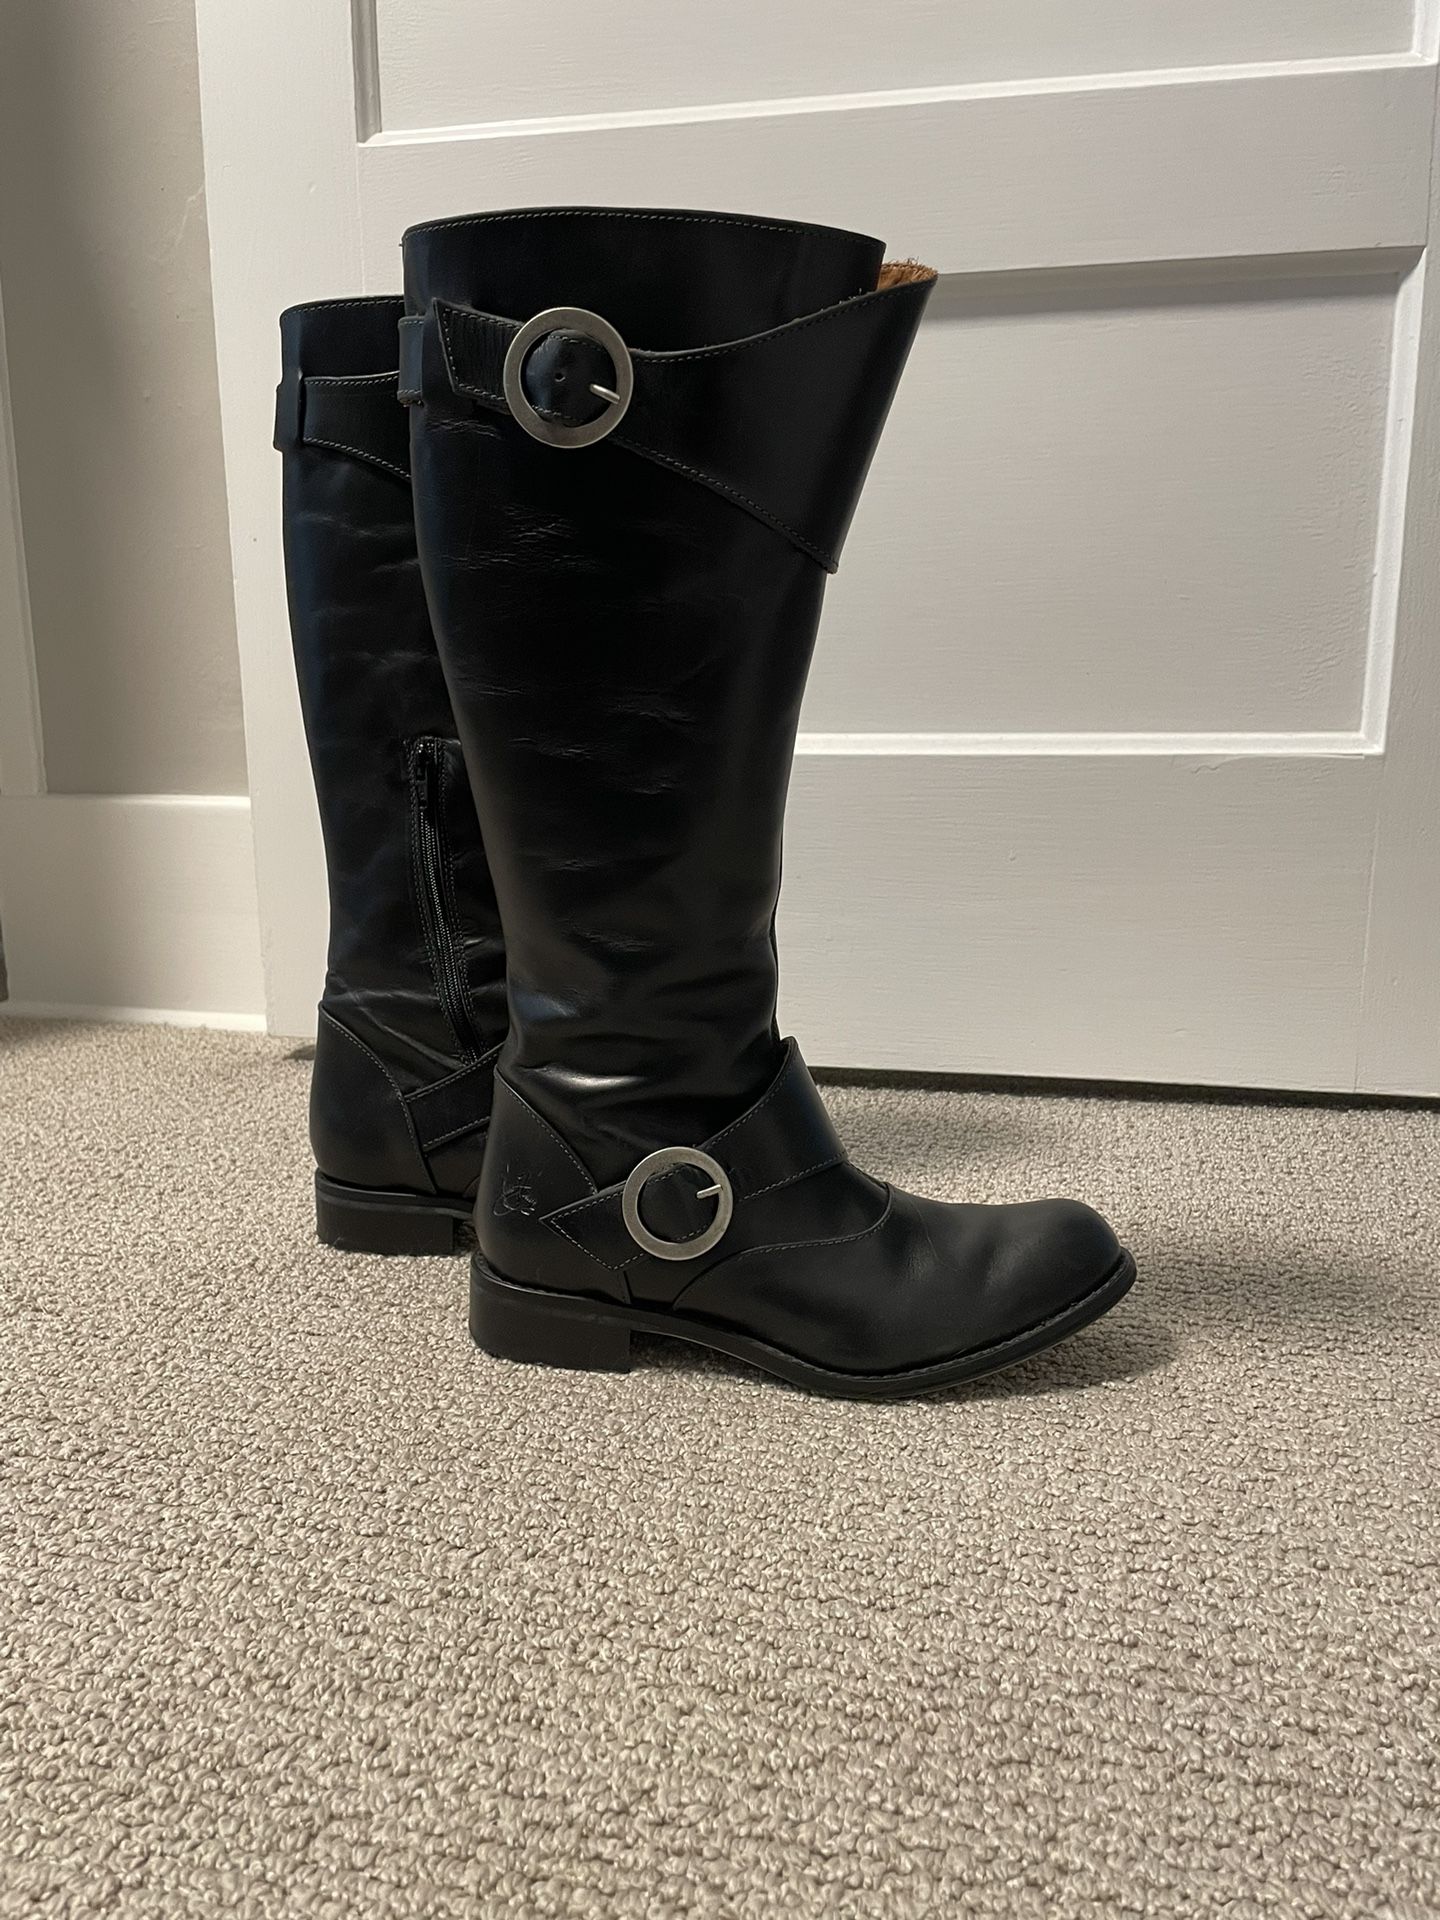 John Fluevog Women’s Leather Boots 8.5